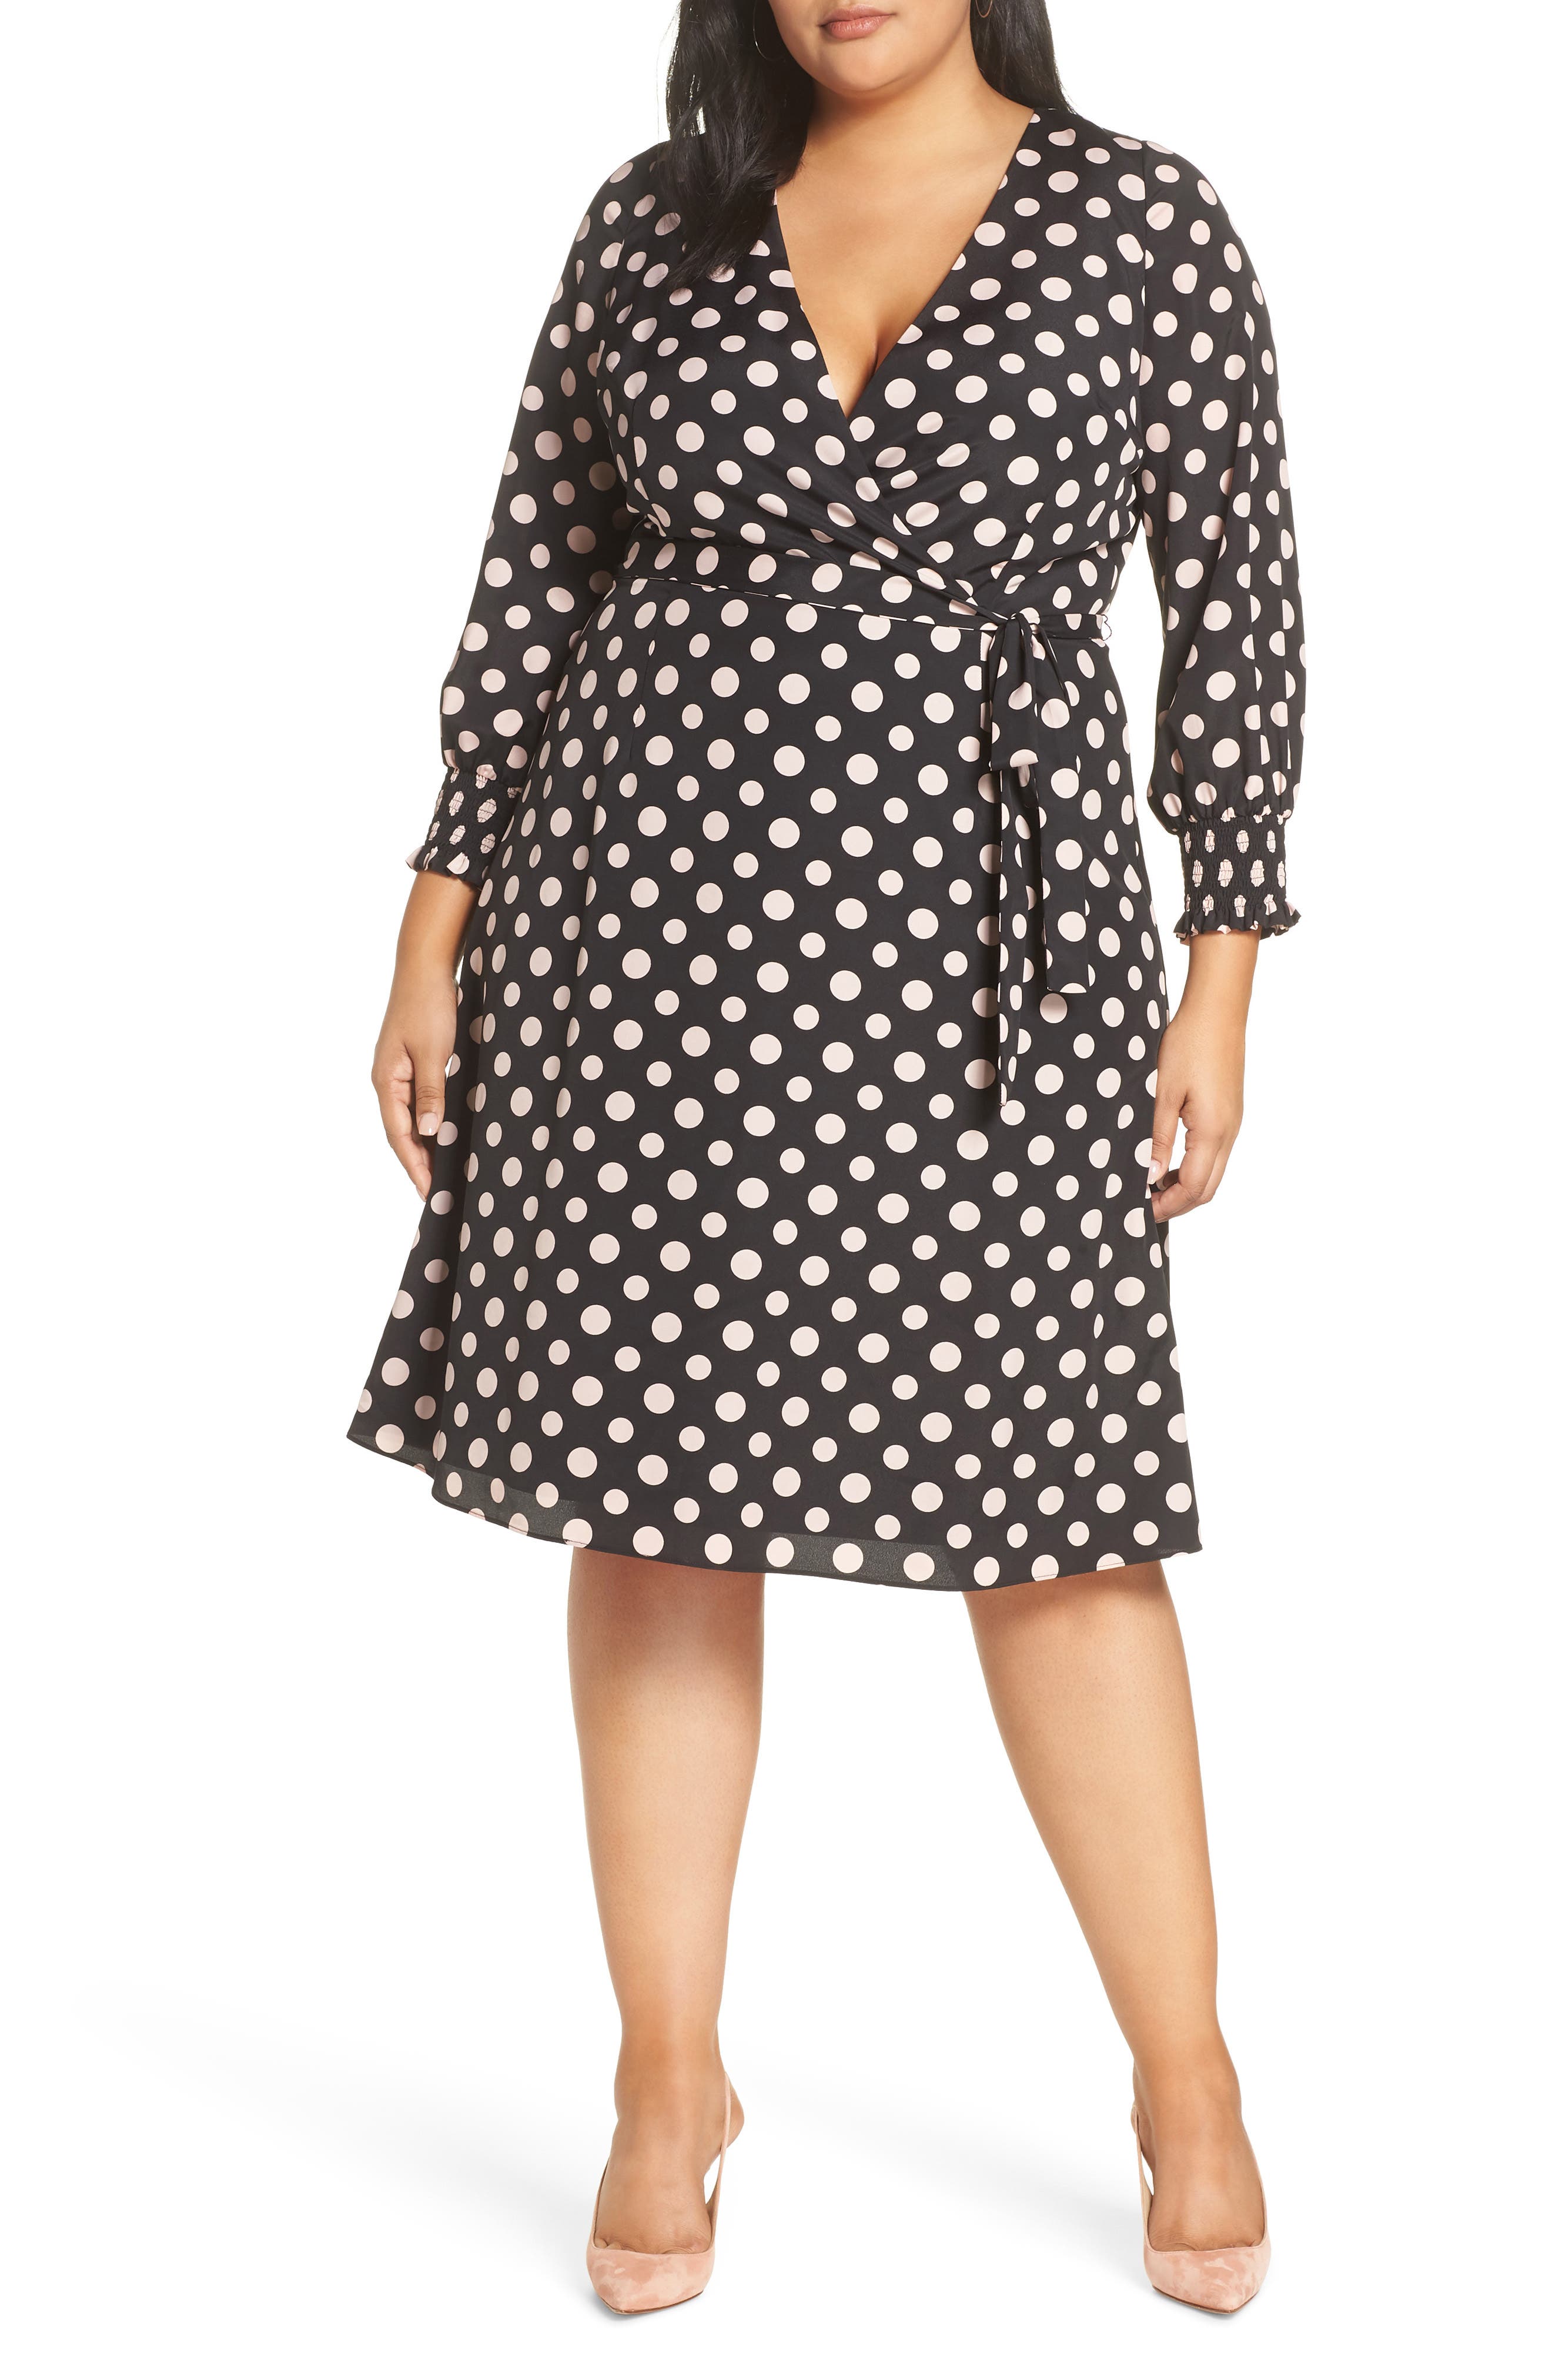 Plus Size Polka Dot Dresses - Vintage 40s, 50s, 60s, 70s Dresses